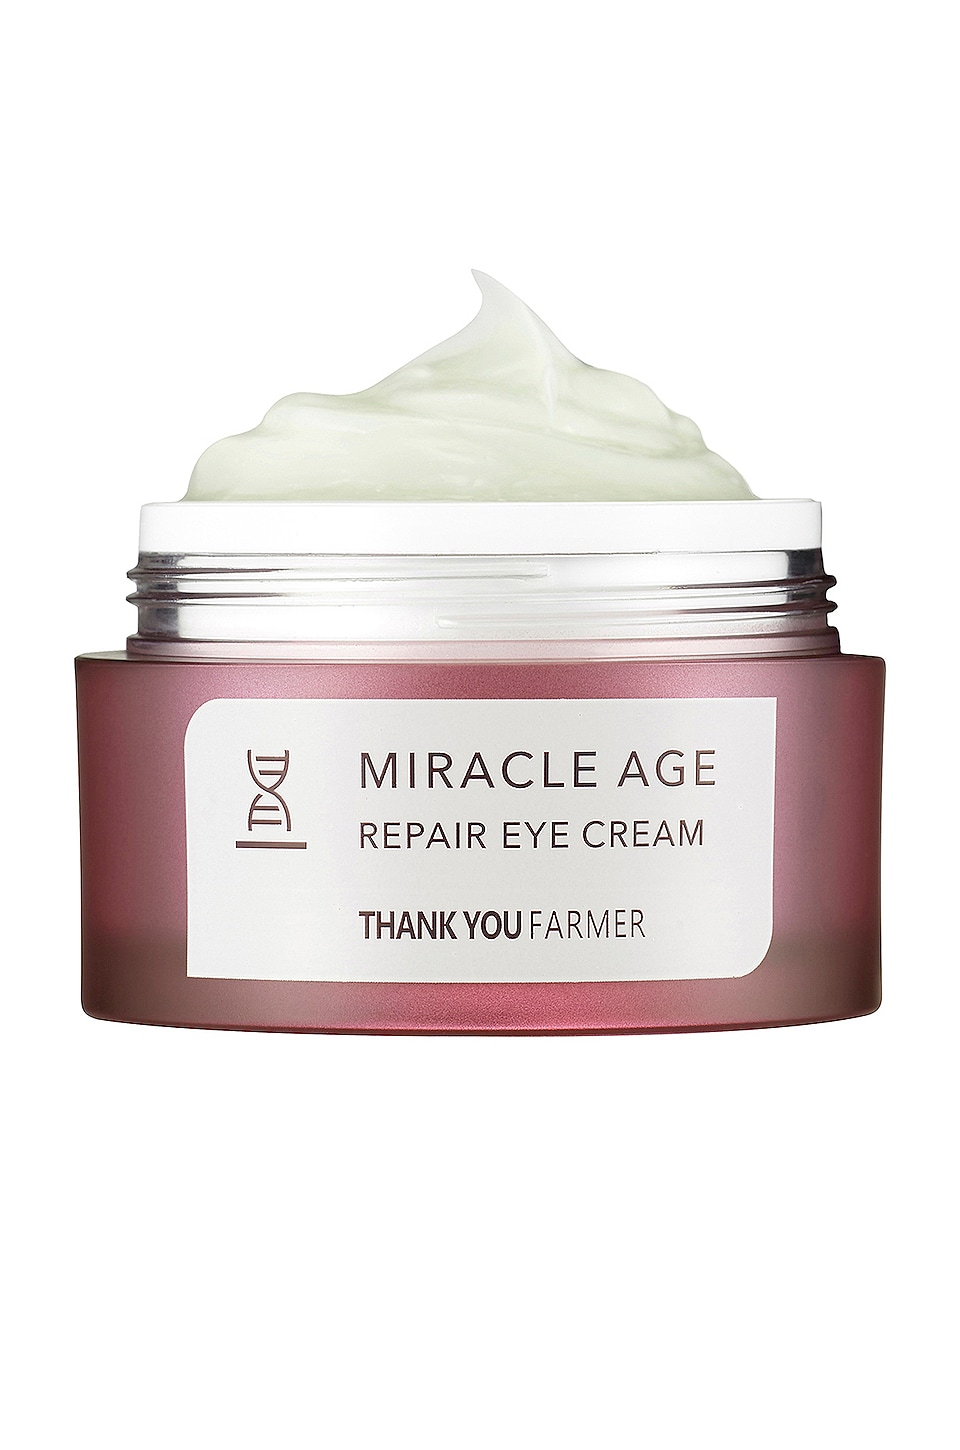 Крем Miracle age. Miracle age крем для глаз. Крем thank you Farmer. Miracle age Repair Cream.